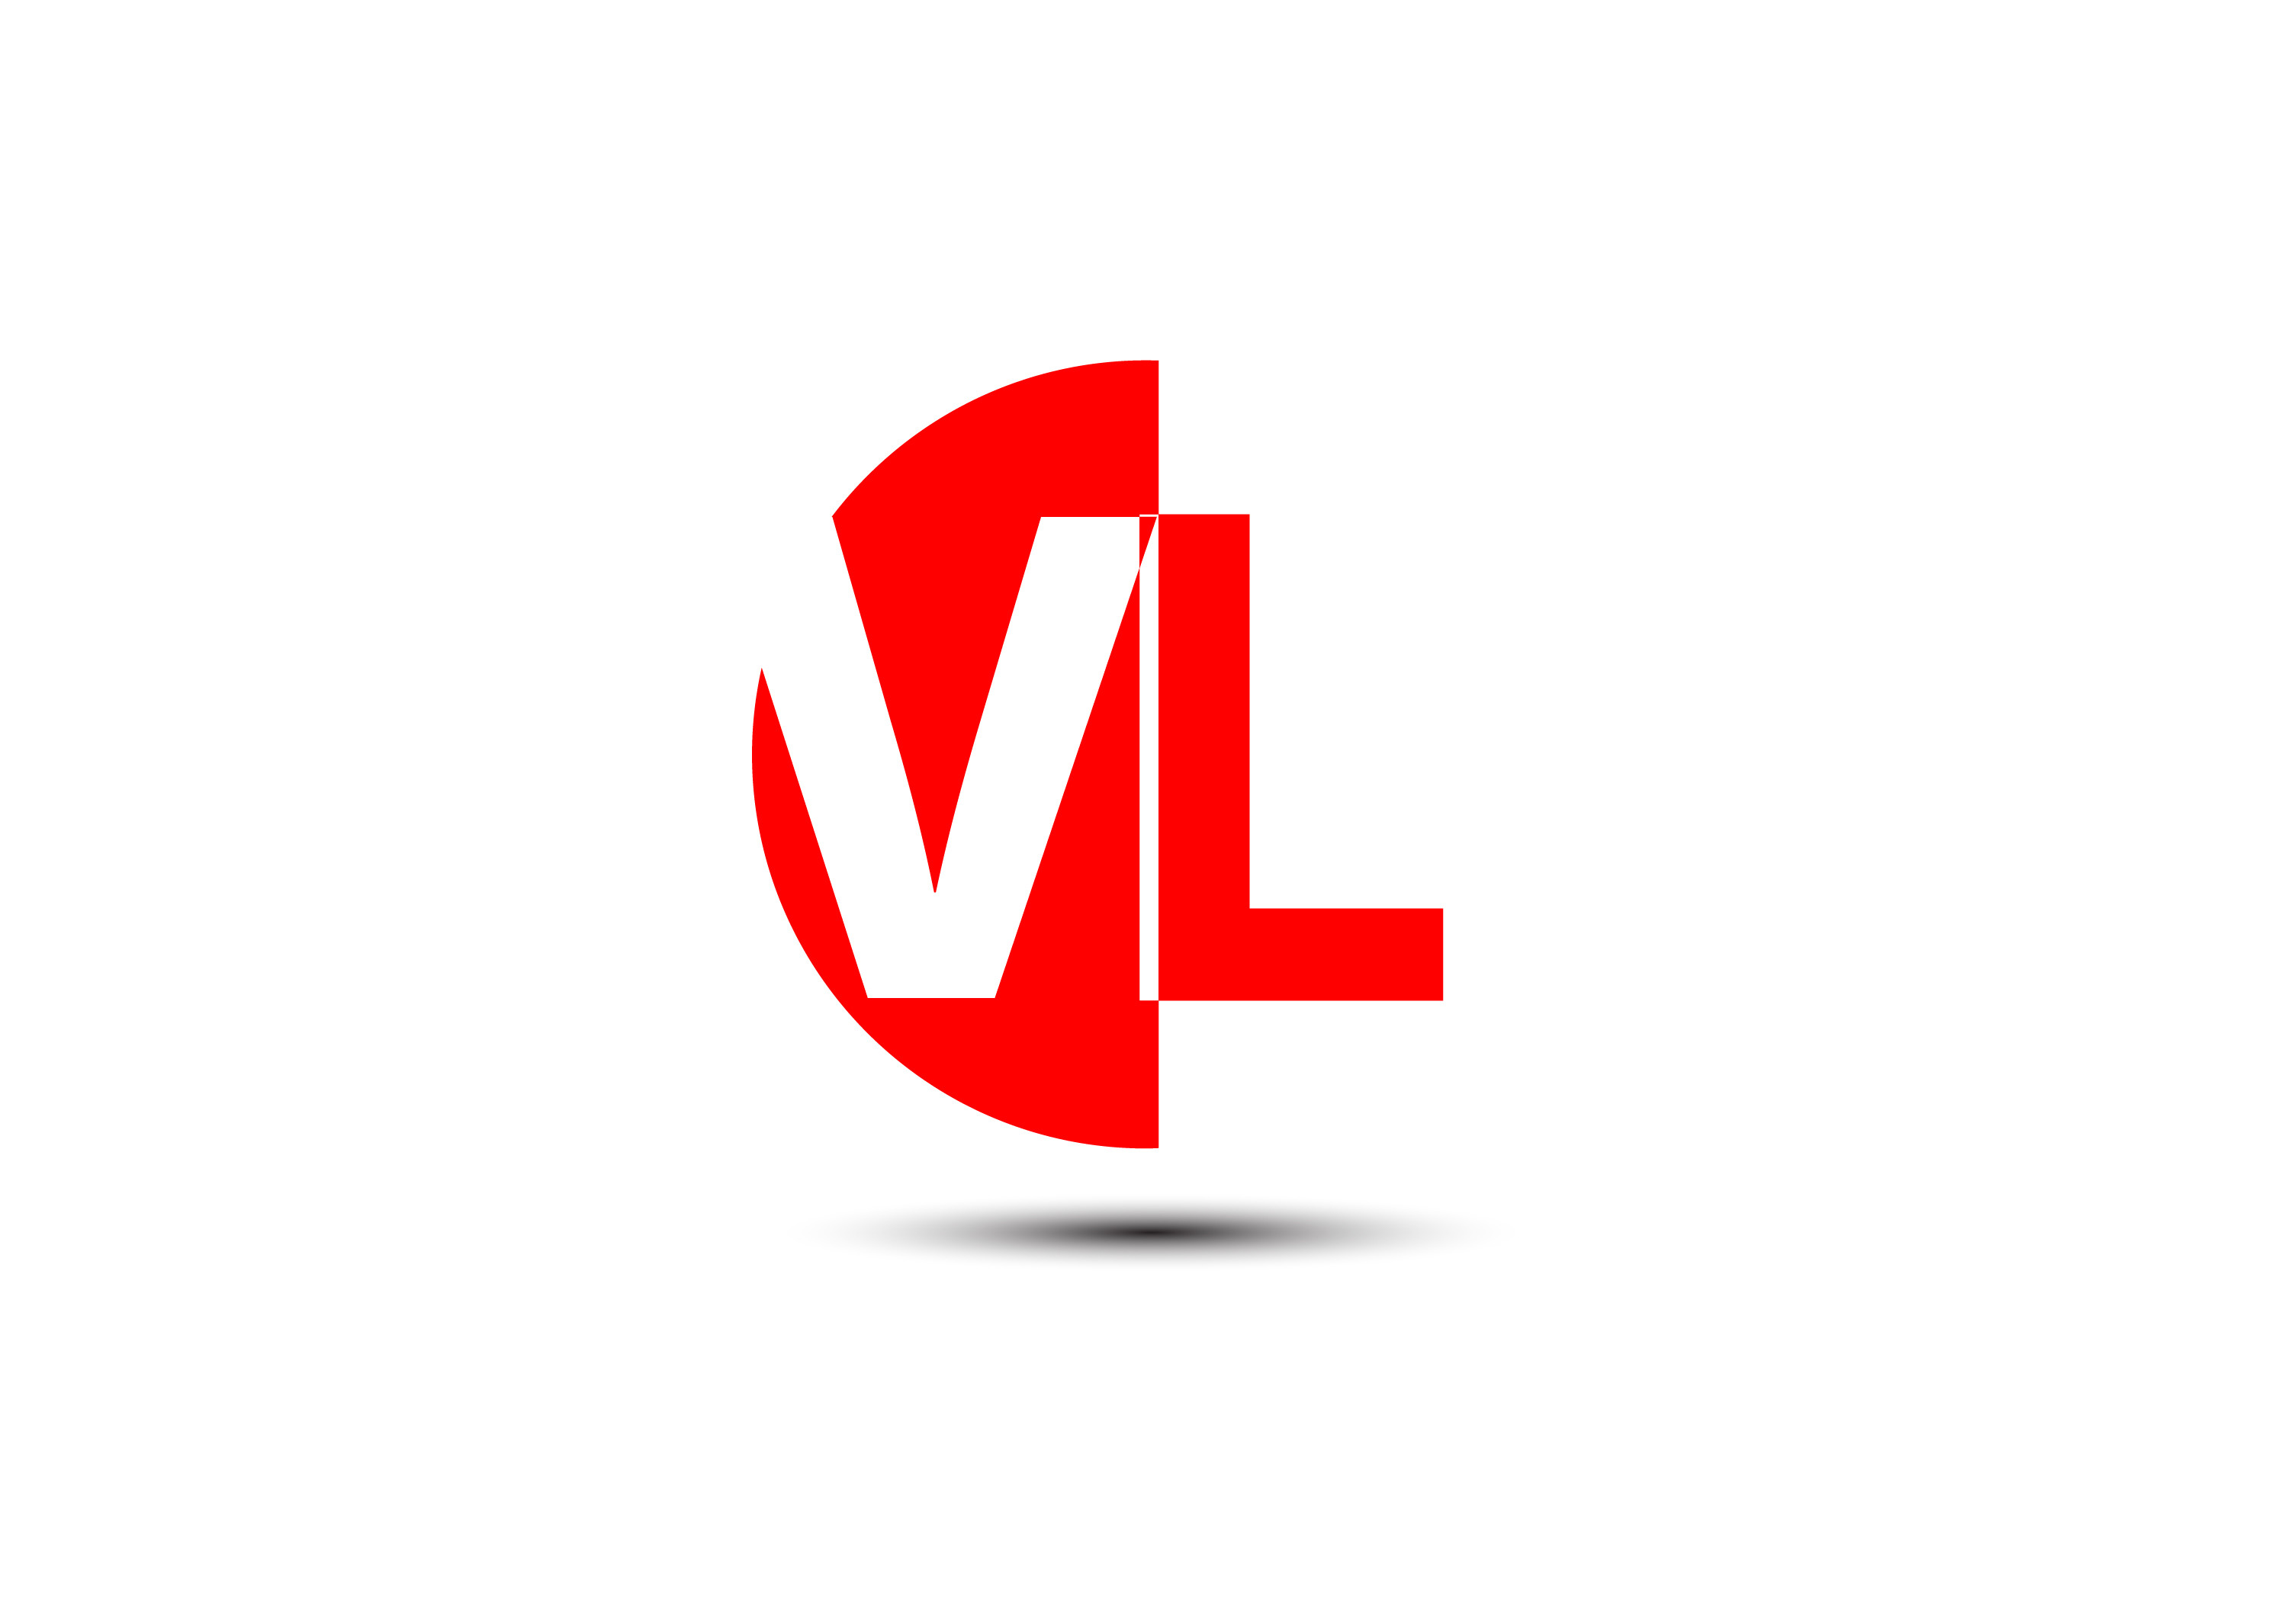 Vl PNG Transparent Images Free Download, Vector Files